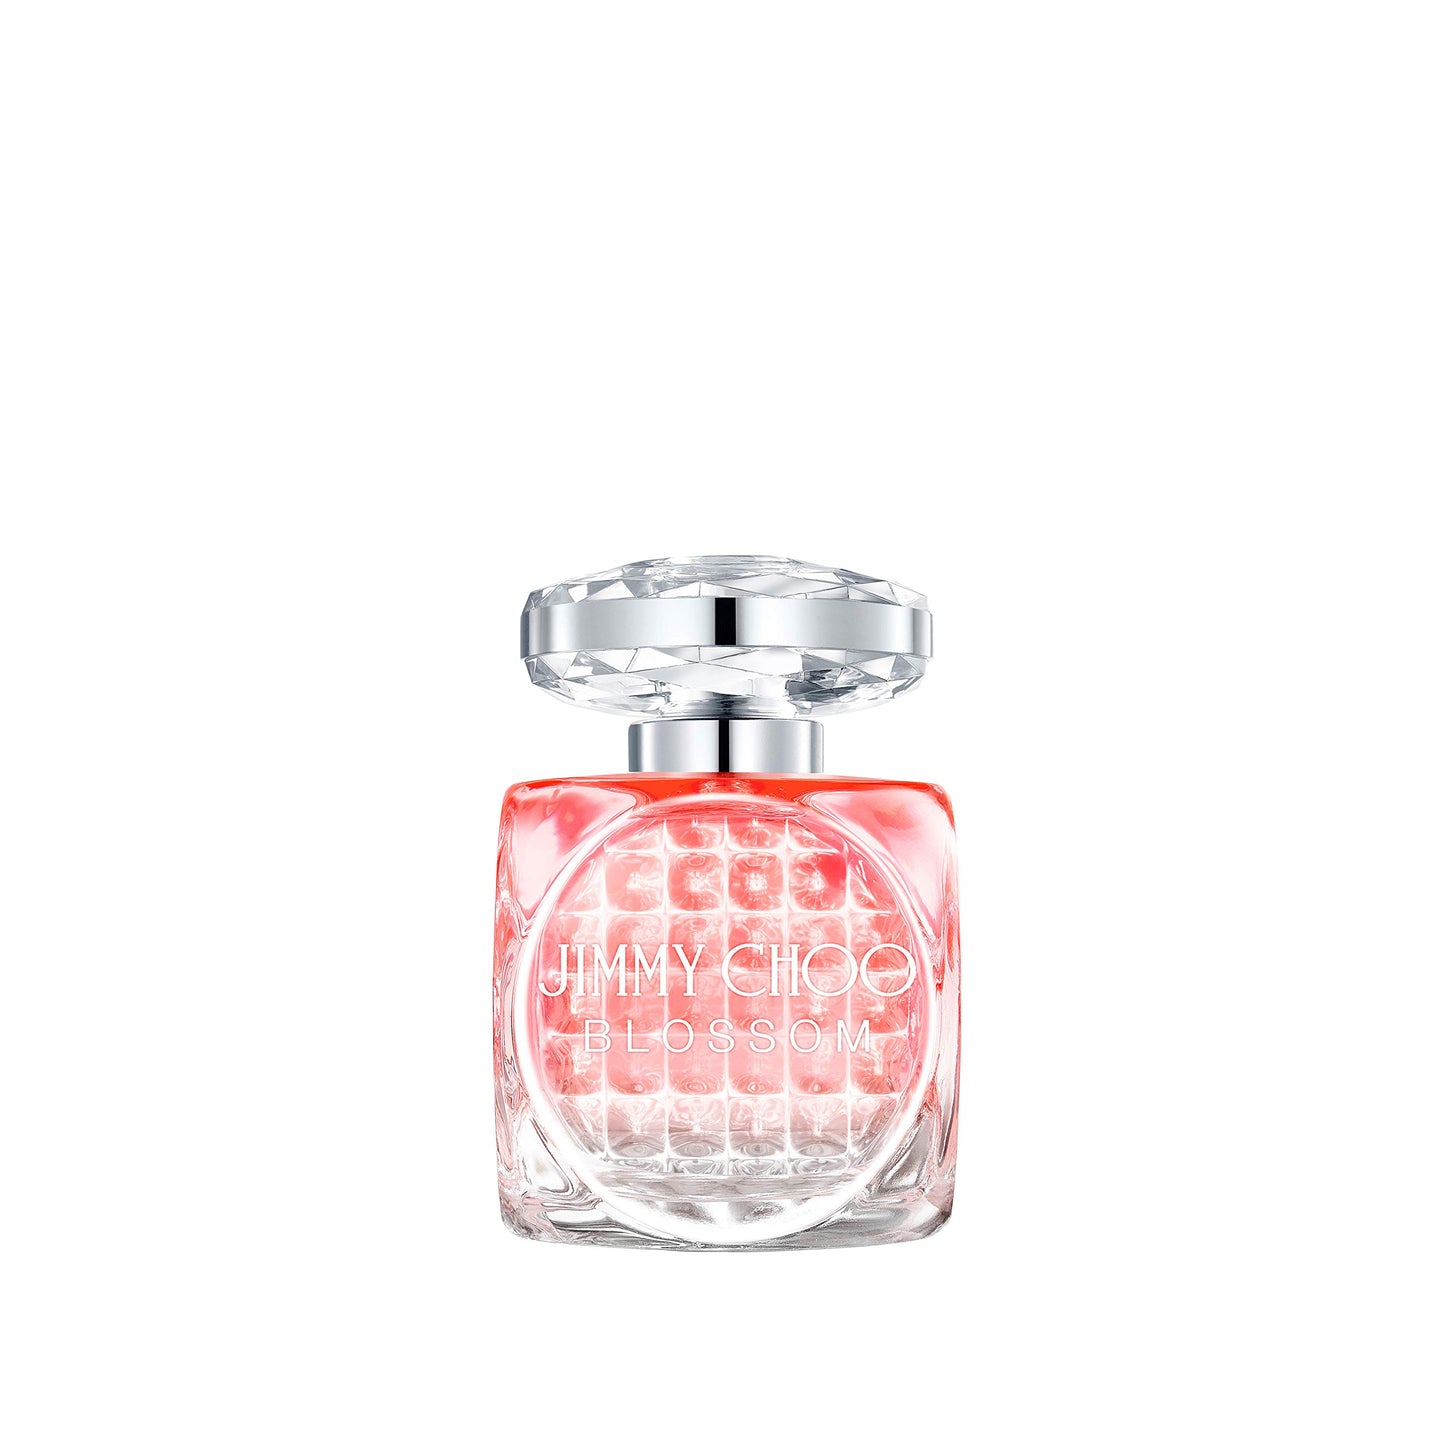 Jimmy Choo Blossom Special Edition 2018 Eau de Parfum, 60 ml